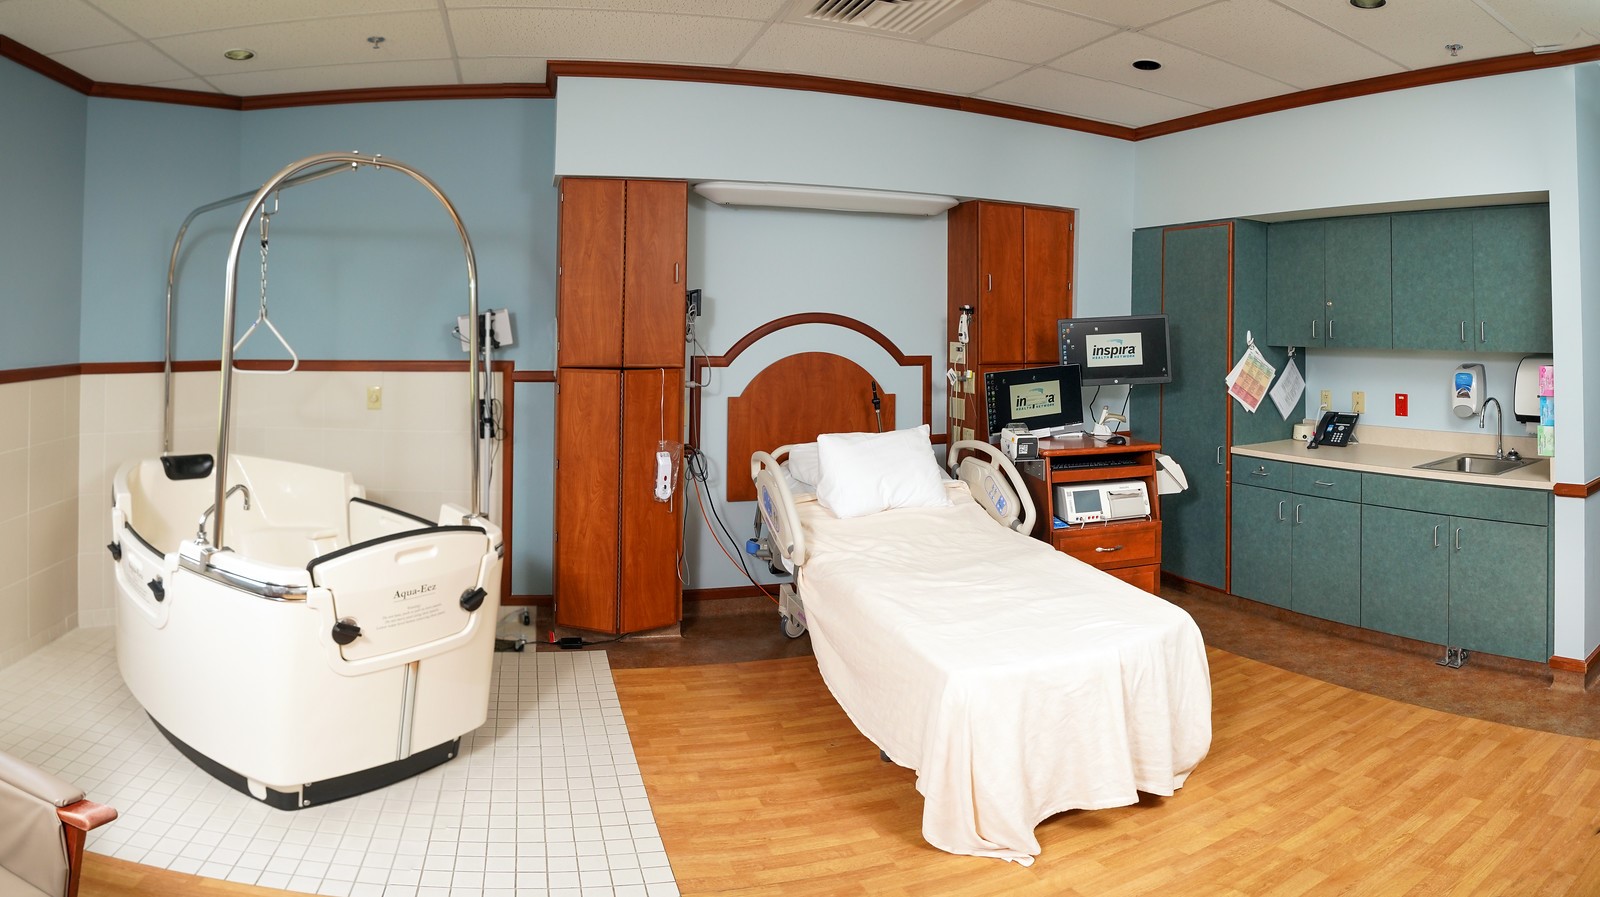 Inspira Medical Center Elmer Maternity Room with Birthing Tub